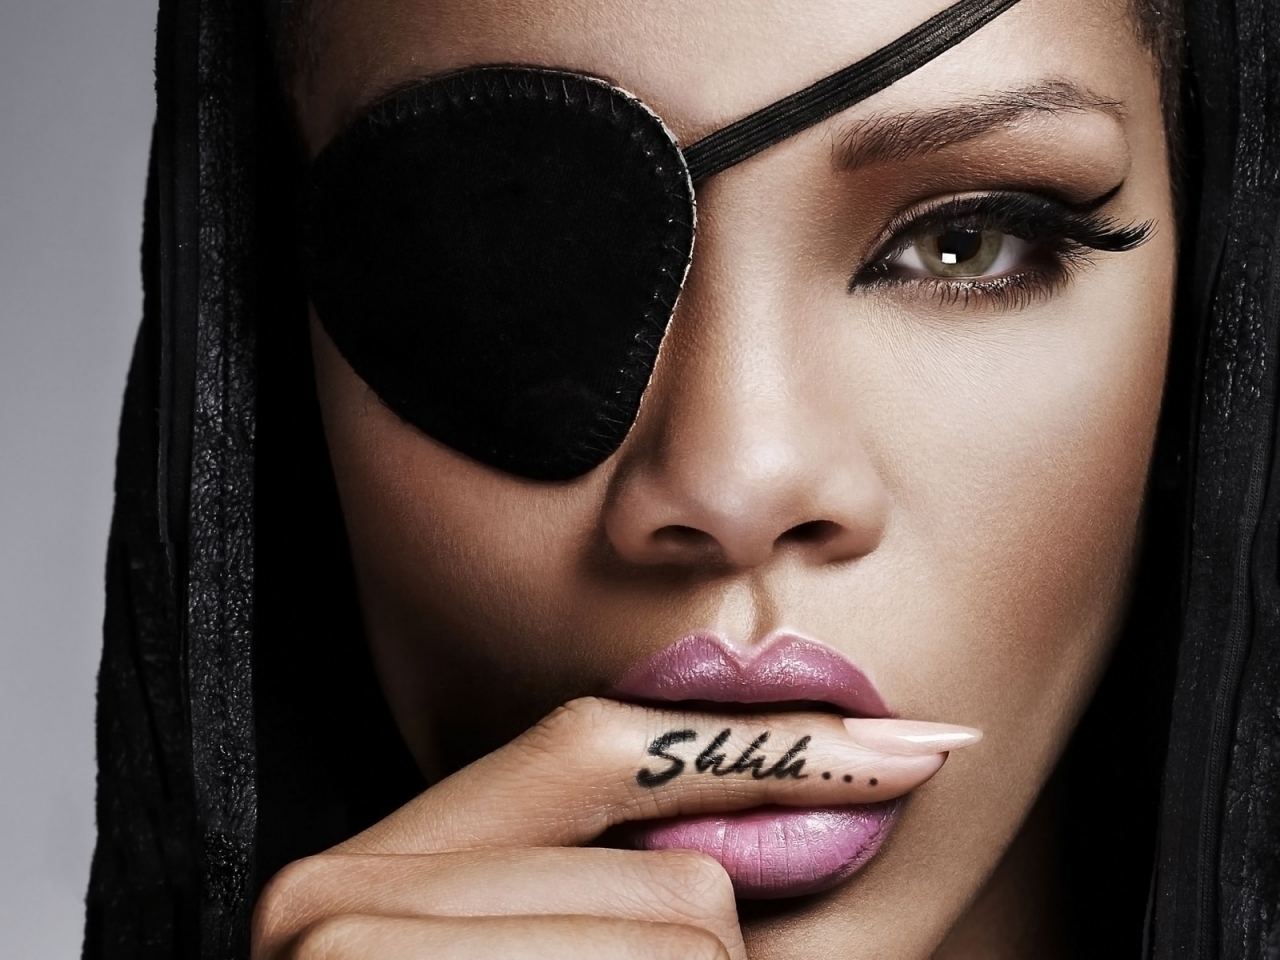 Rihanna Shhh Tattoo for 1280 x 960 resolution